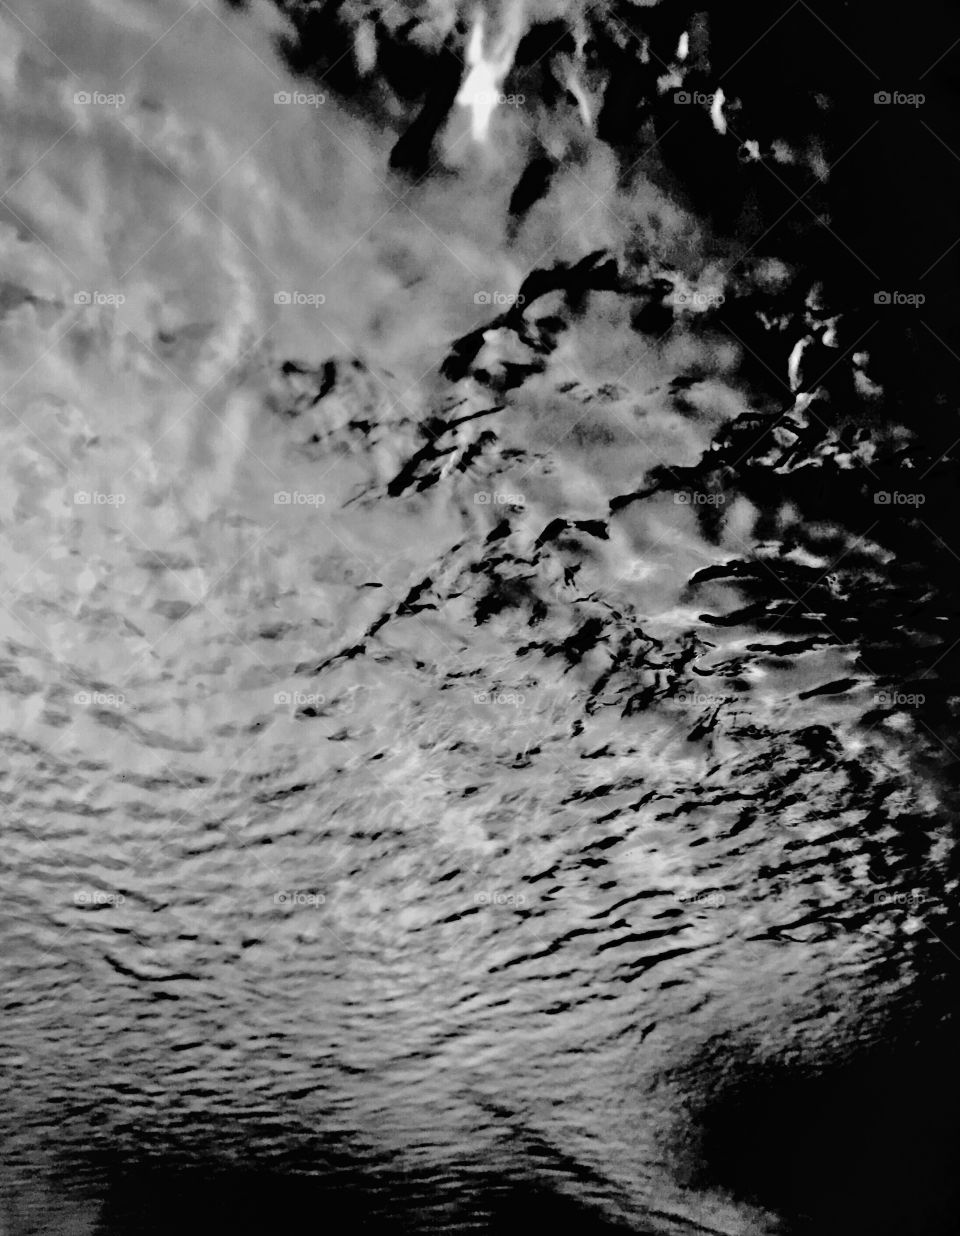 Water in black & white 